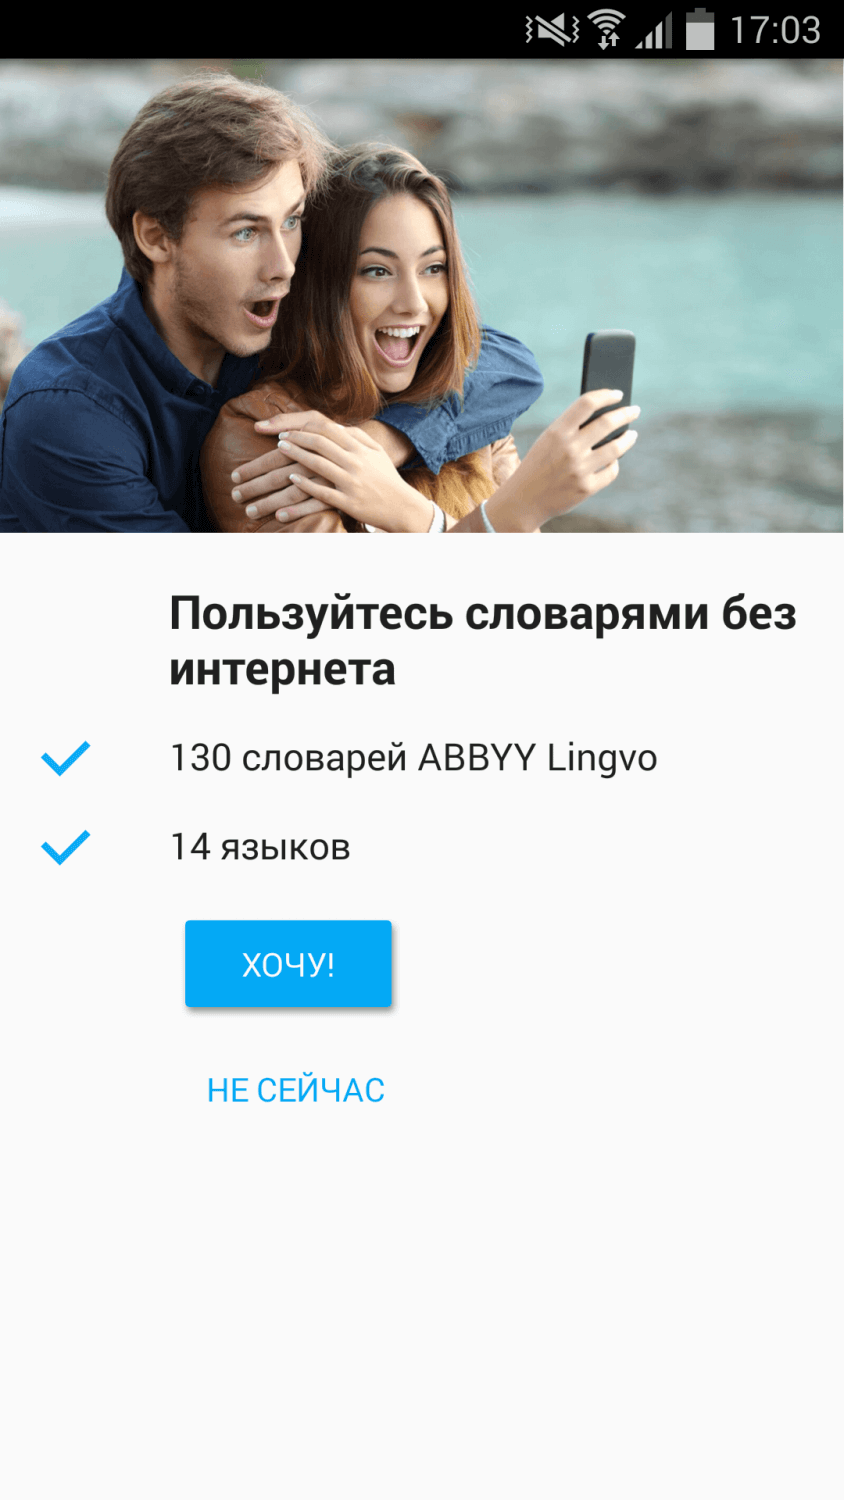 ABBYY раздает Samsung Galaxy Note 4 и бесплатные словари! Фото.